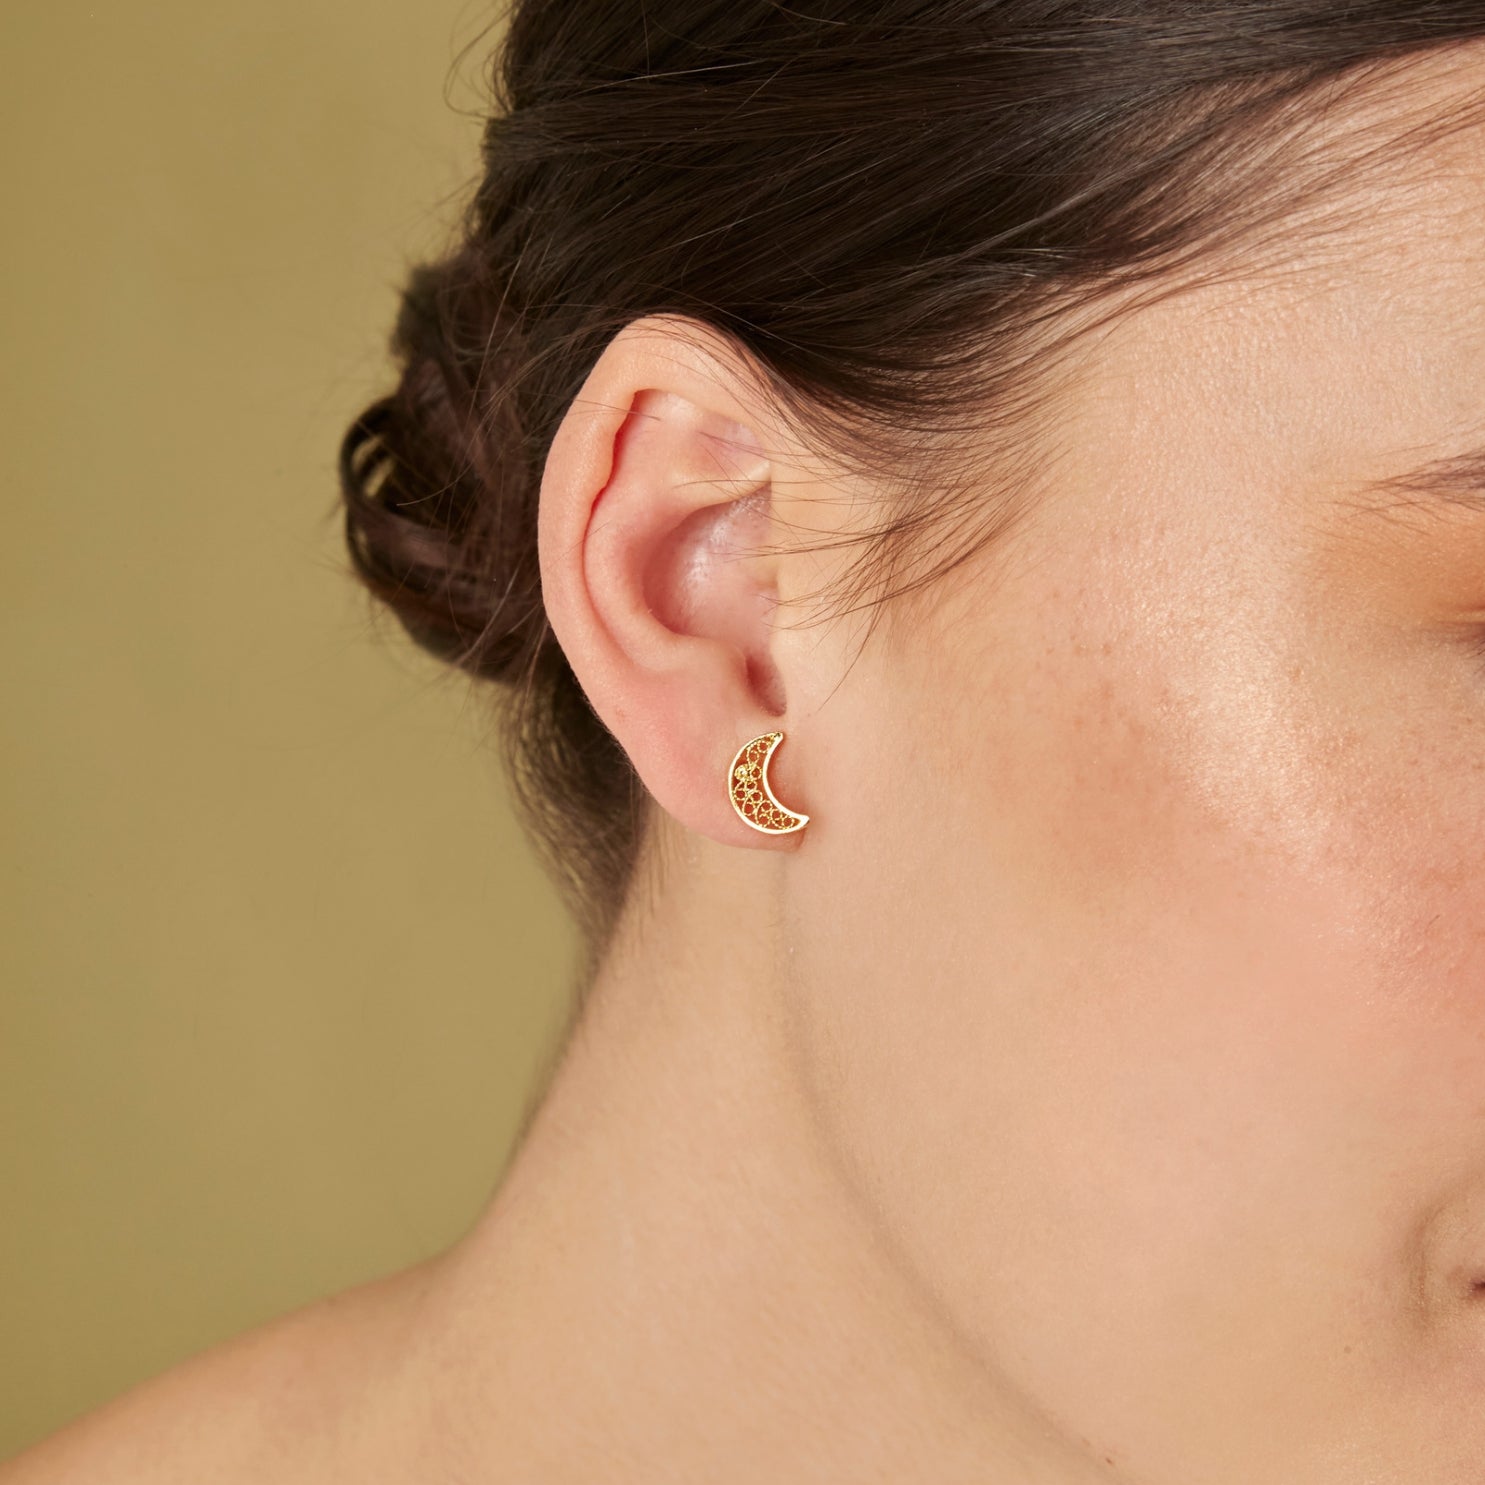 Luna 18k Gold Plated Filigree Stud Earrings - Earrings